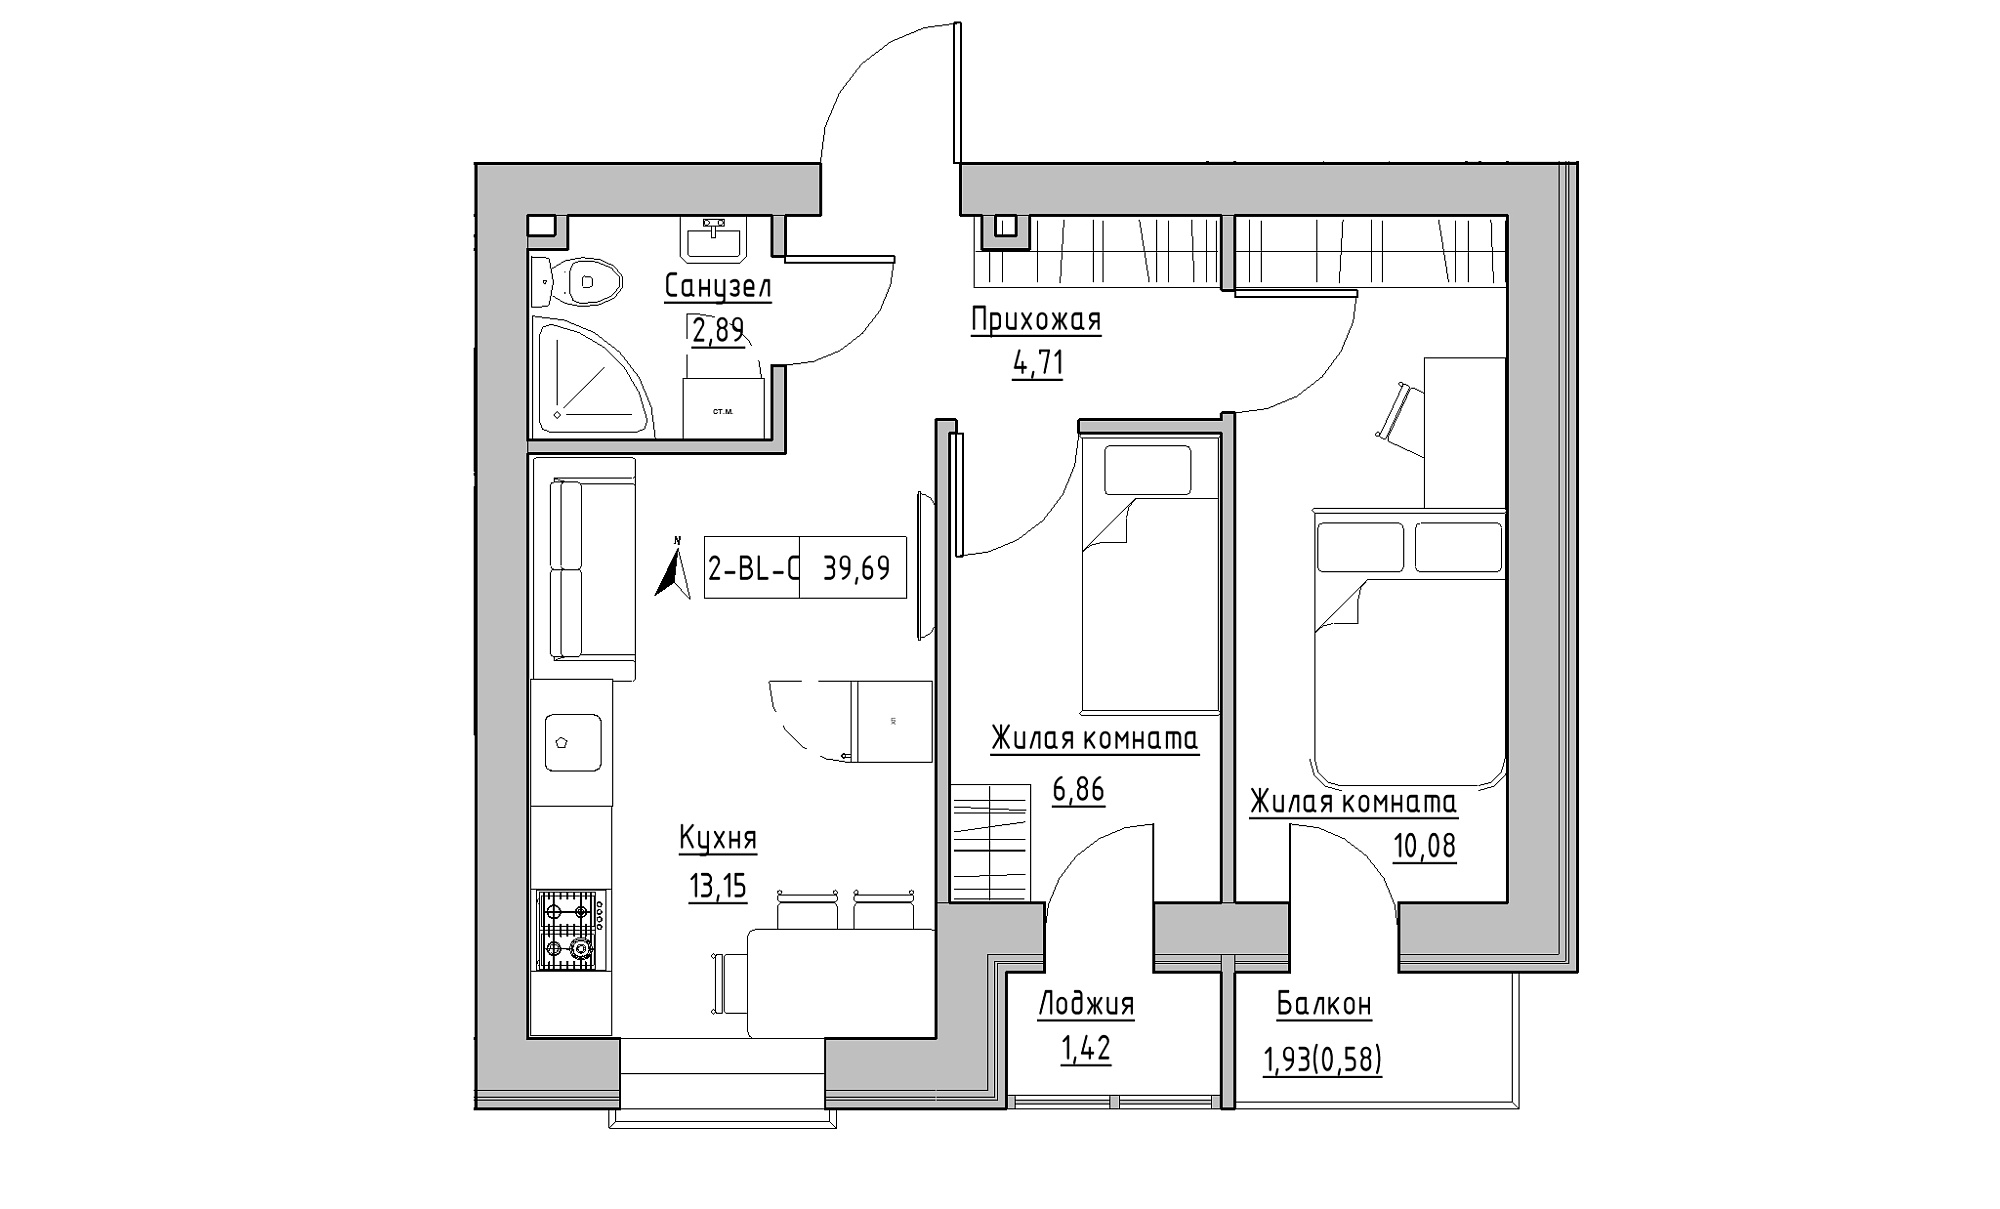 Planning 2-rm flats area 39.69m2, KS-016-02/0005.